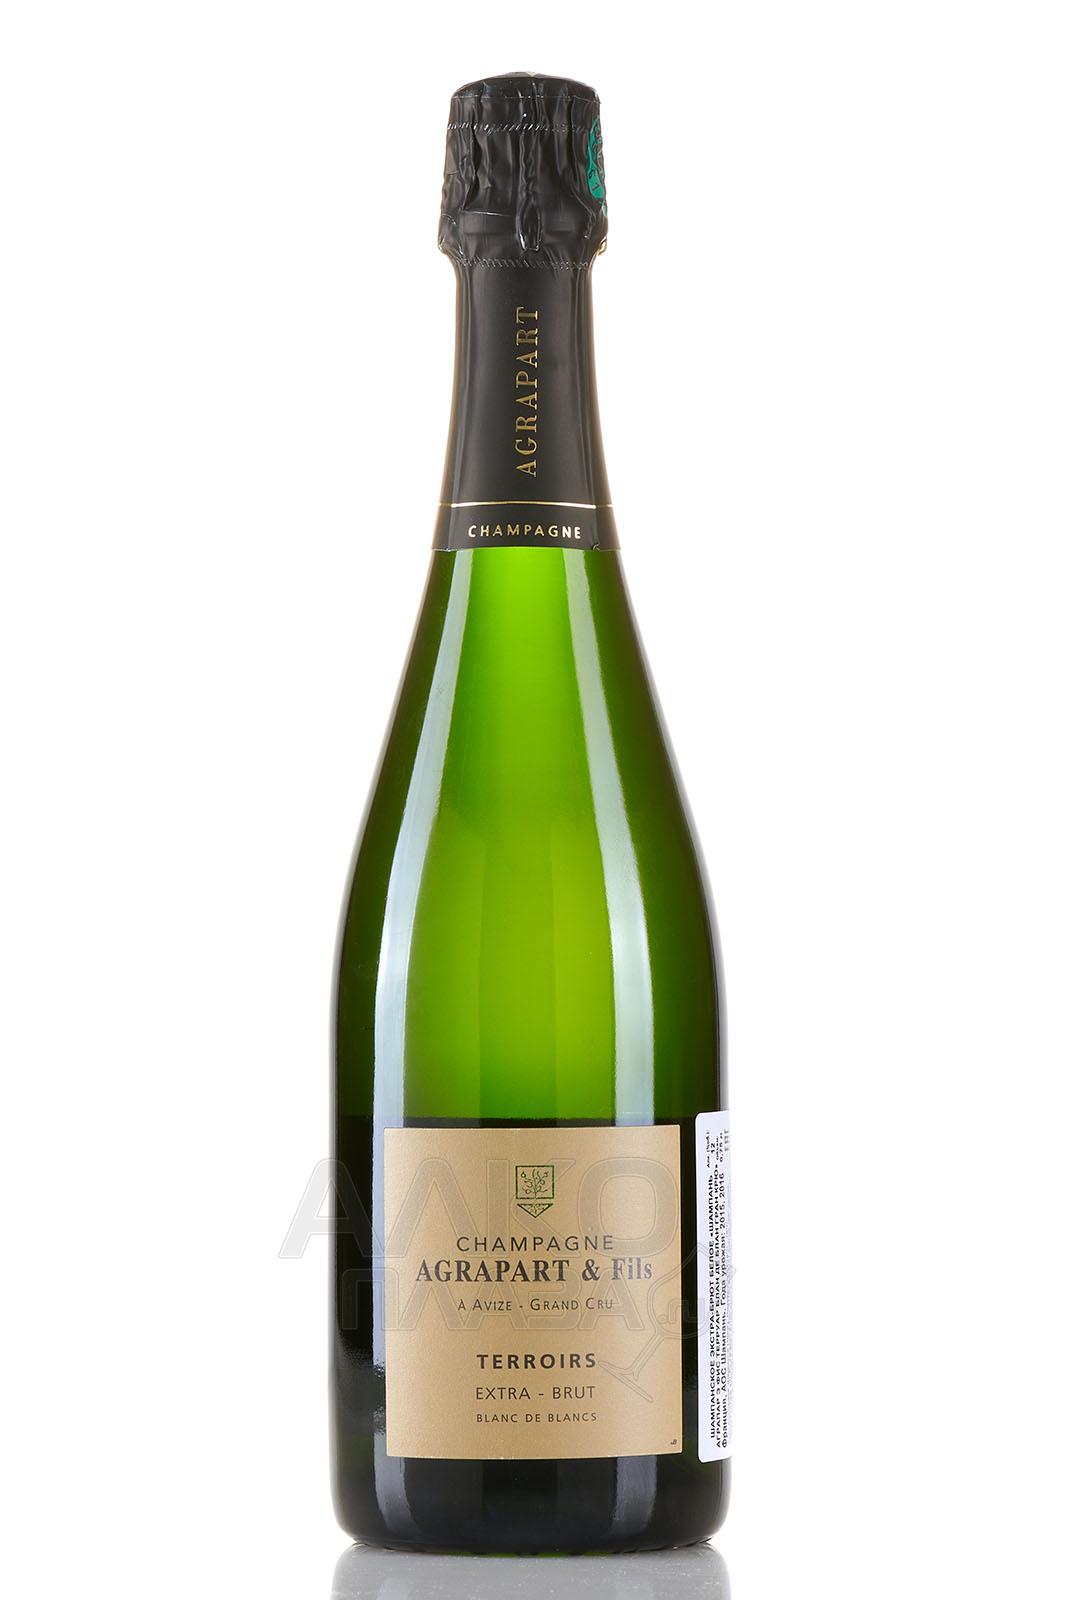 Agrapart Terroirs Blanc de Blancs - шампанское Аграпар э Фис Терруар Блан де Блан Гран Крю 0.75 л